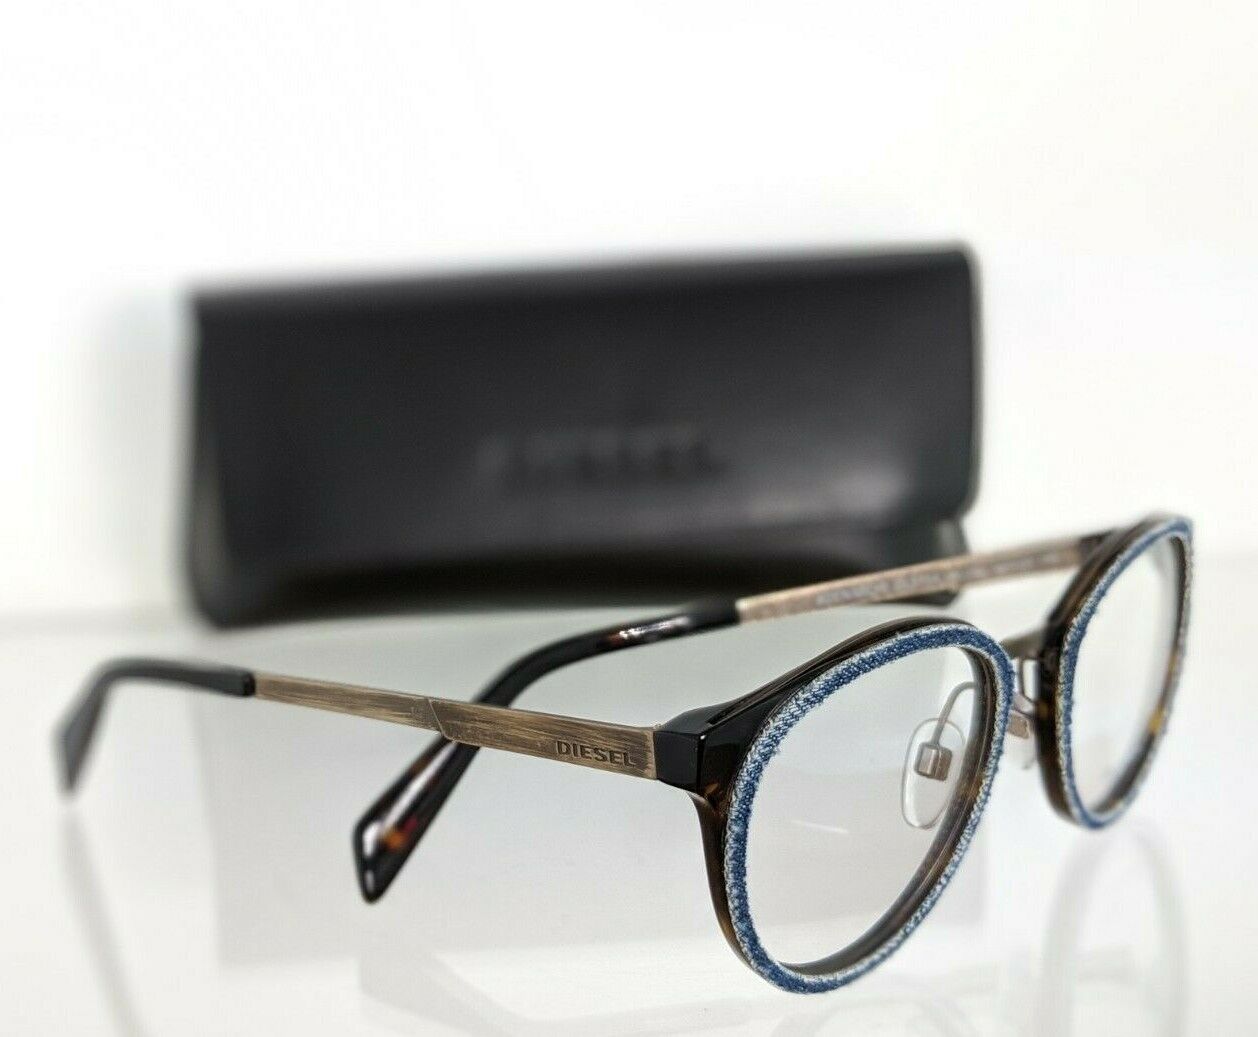 Authentic Brand New Diesel Eyeglasses DL 5154 Color 052 Denim DL5154 50mm